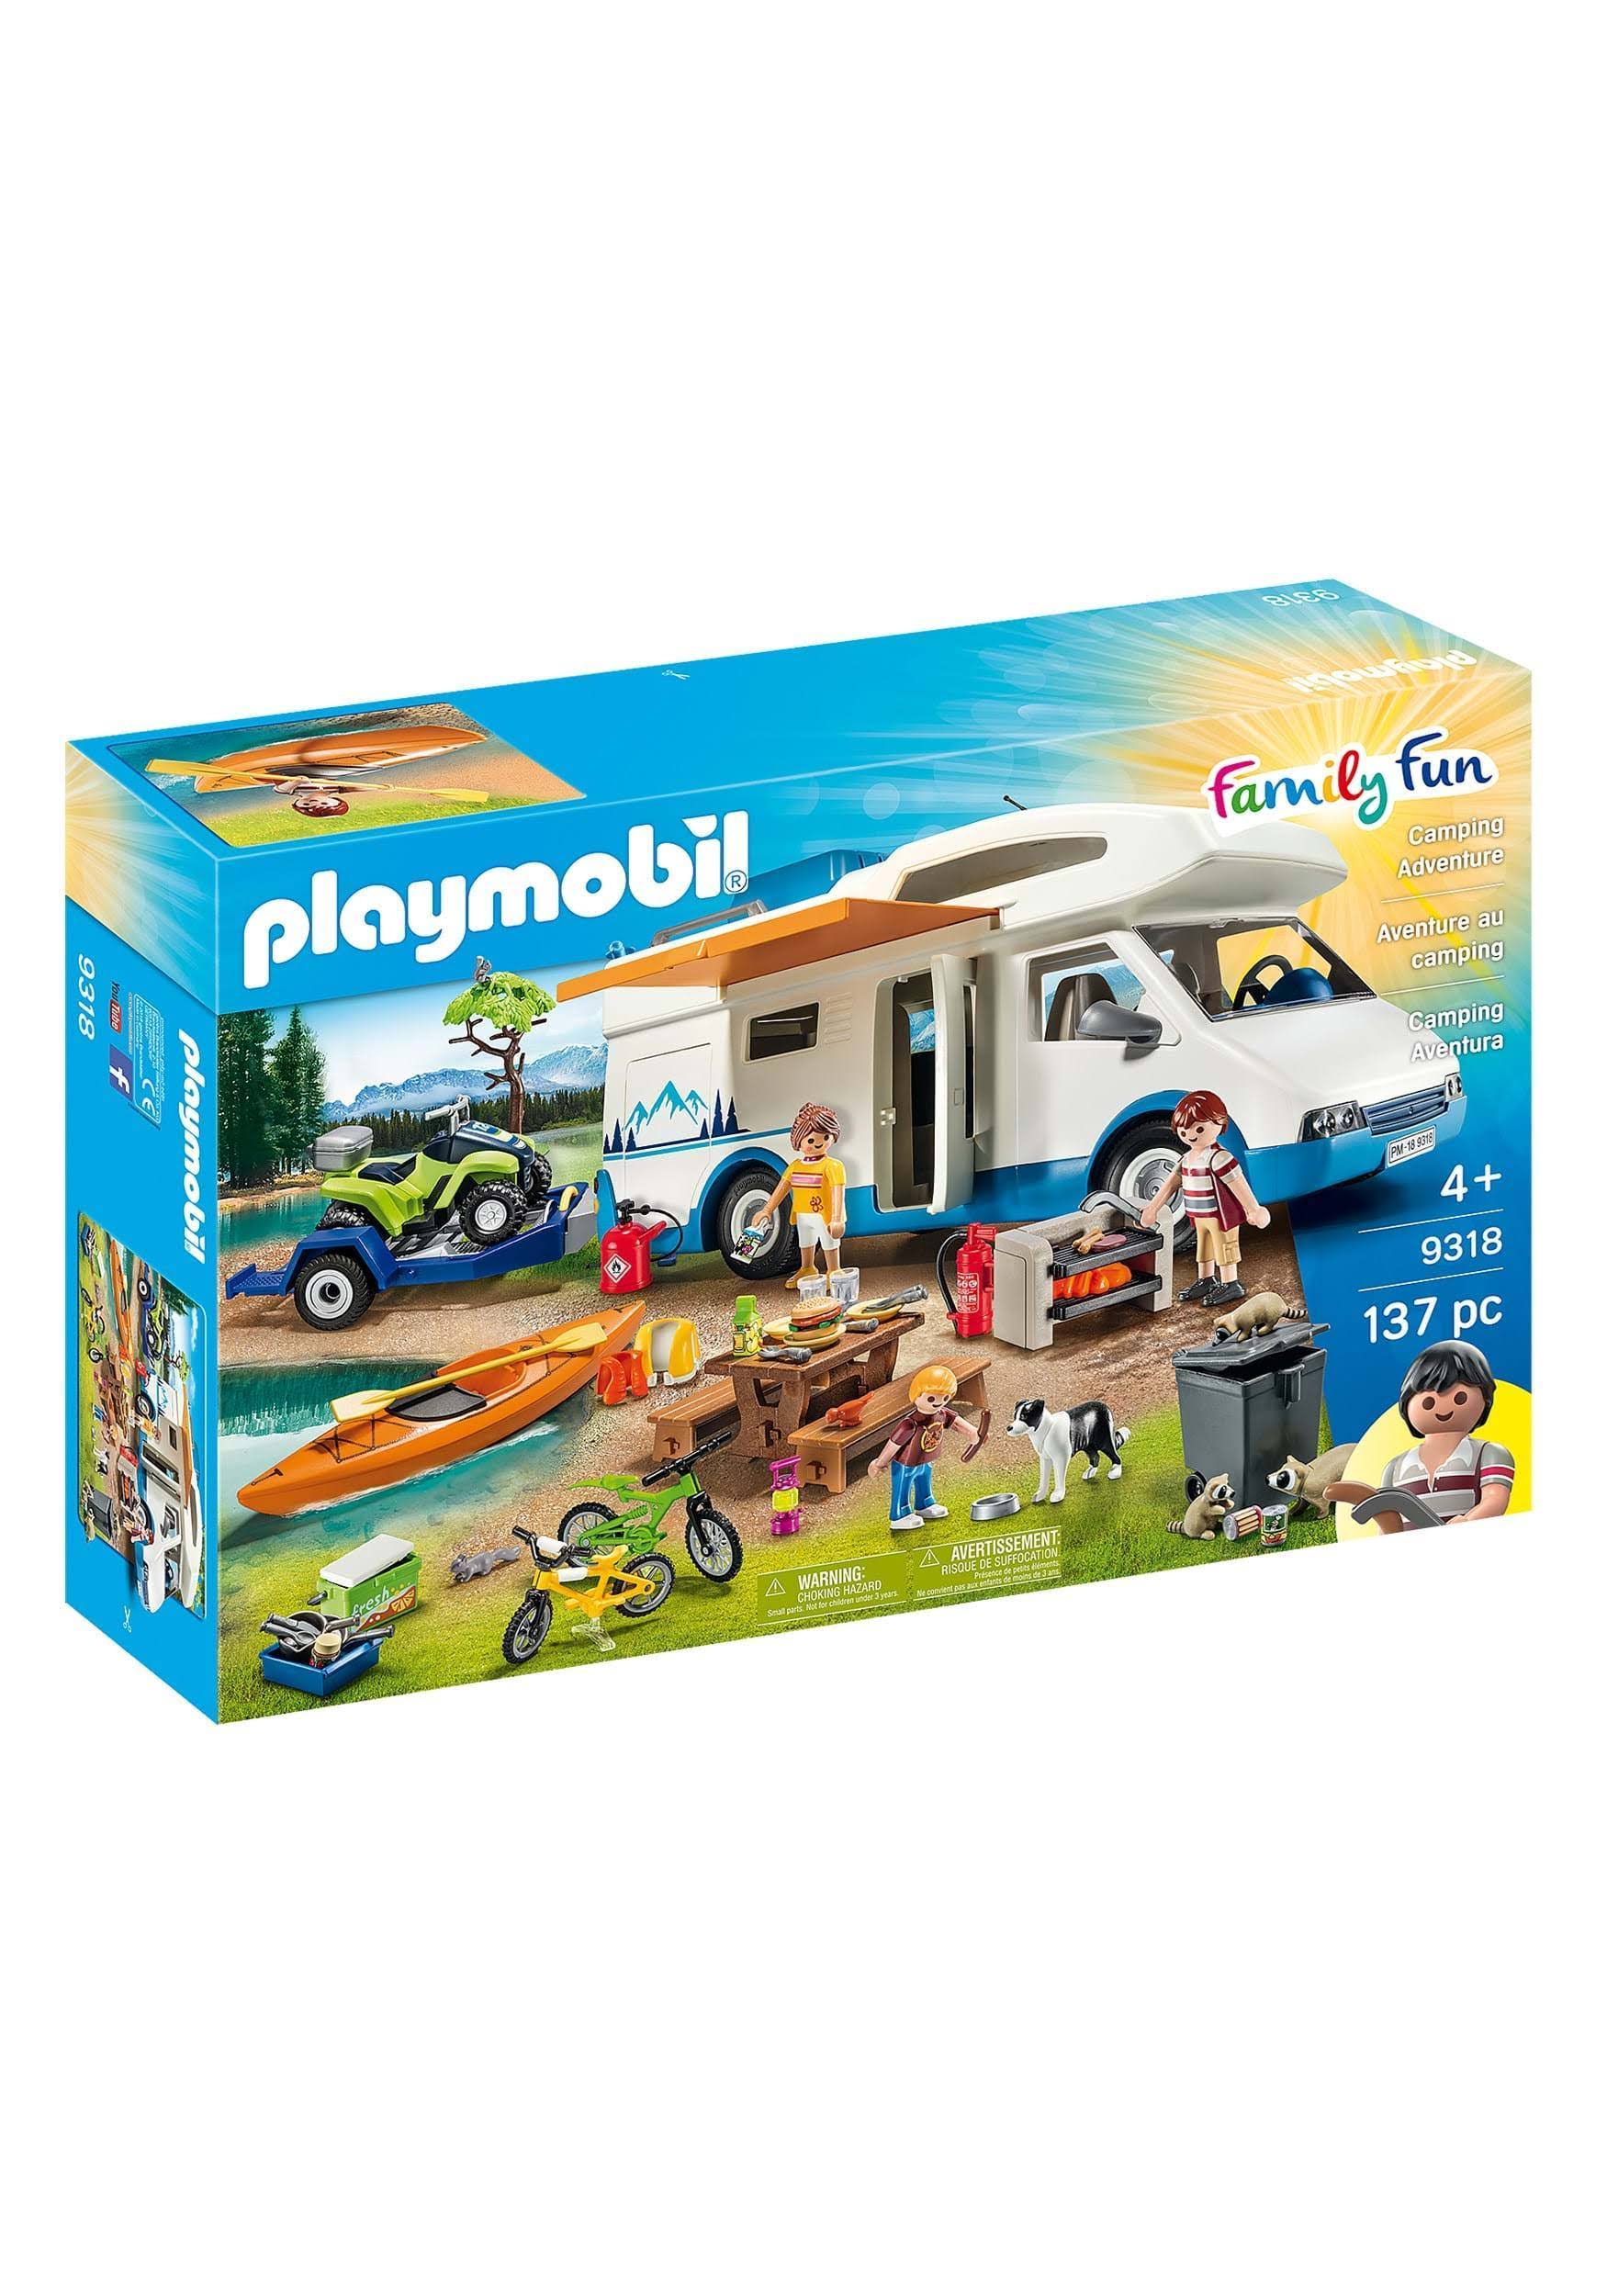 Playmobil 9318 Family Fun Camping Adventure Set